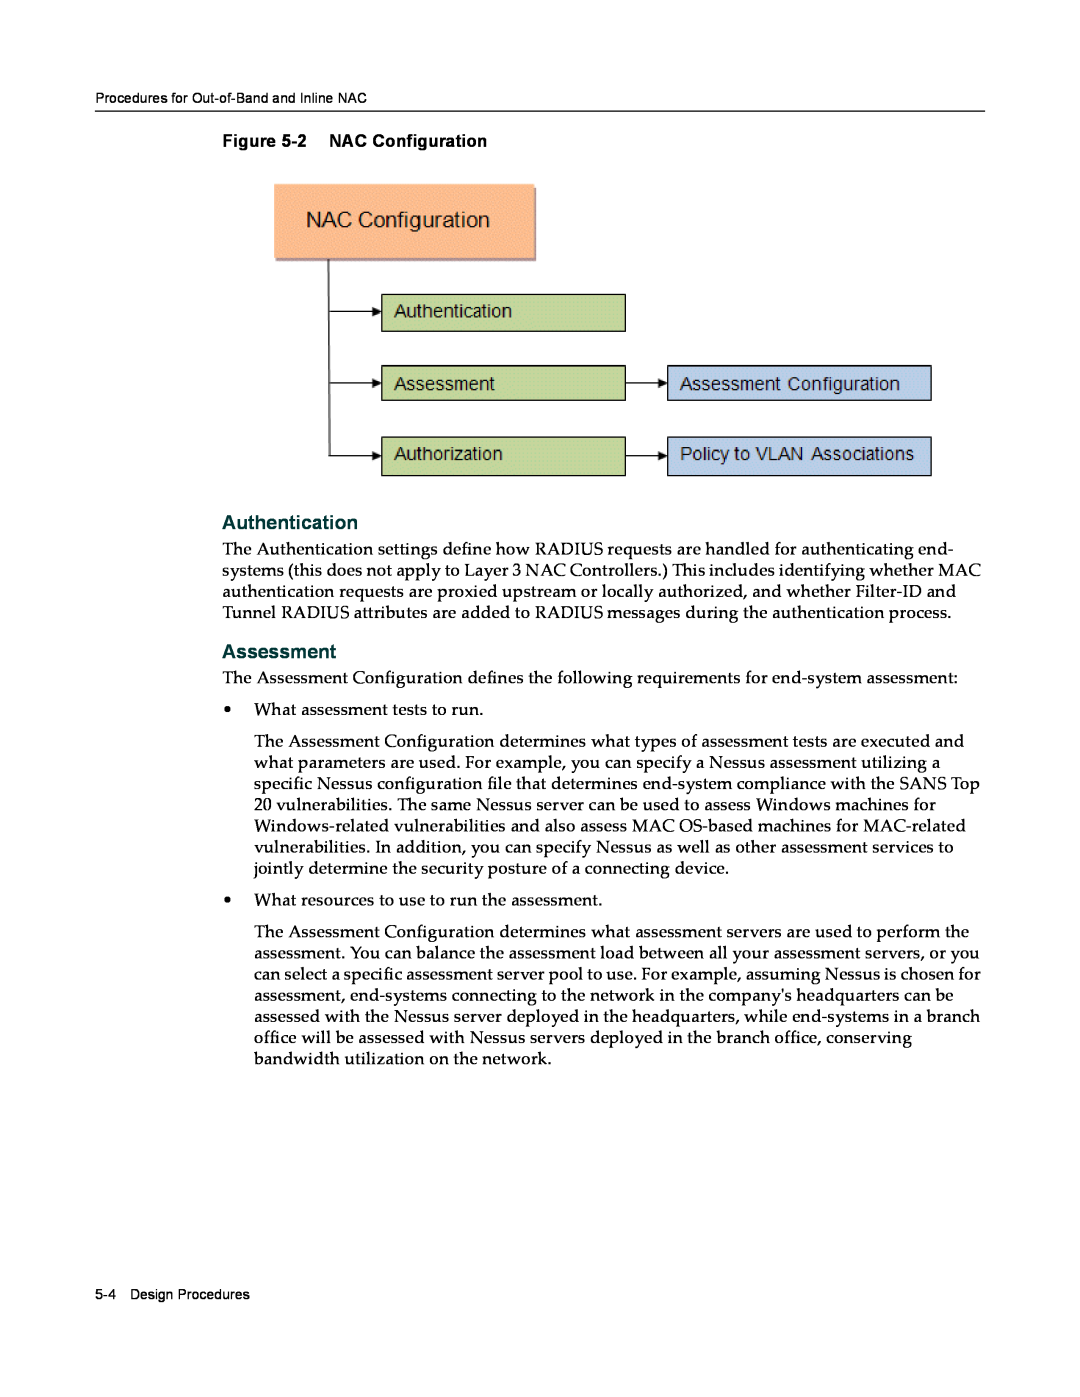 Enterasys Networks 9034385 manual 2 NAC Configuration, Authentication, Assessment 